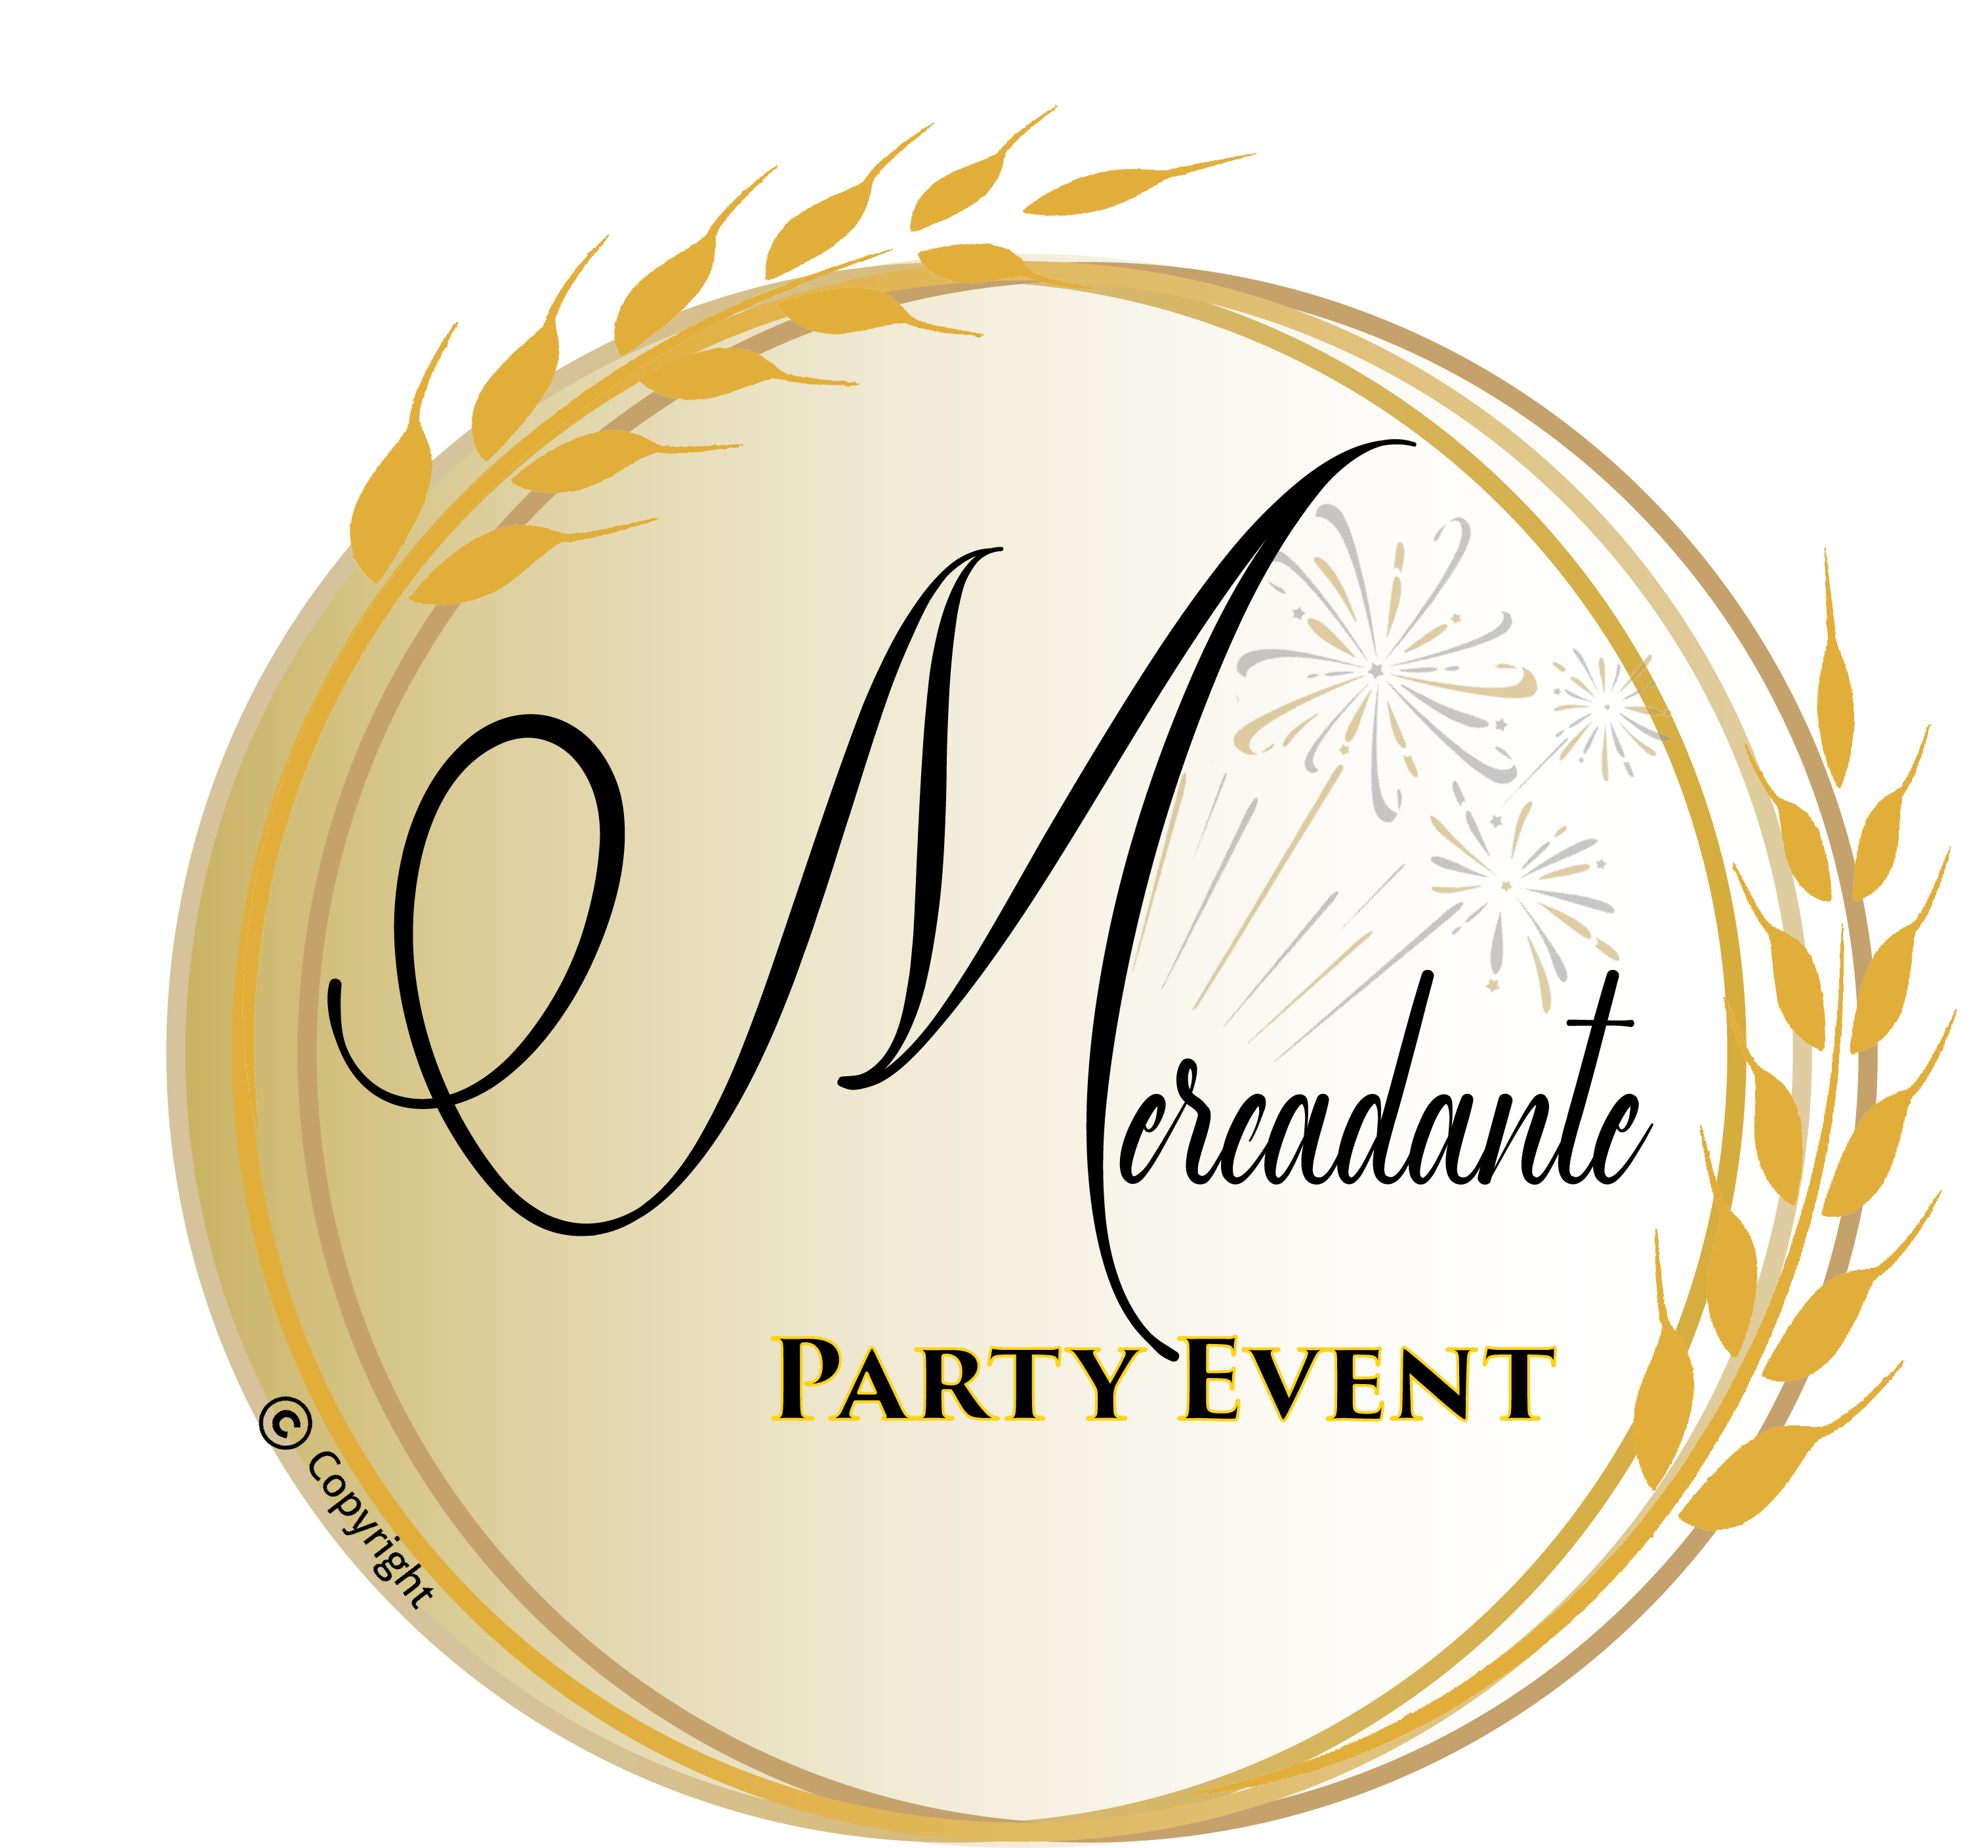 Mercadante Party Event